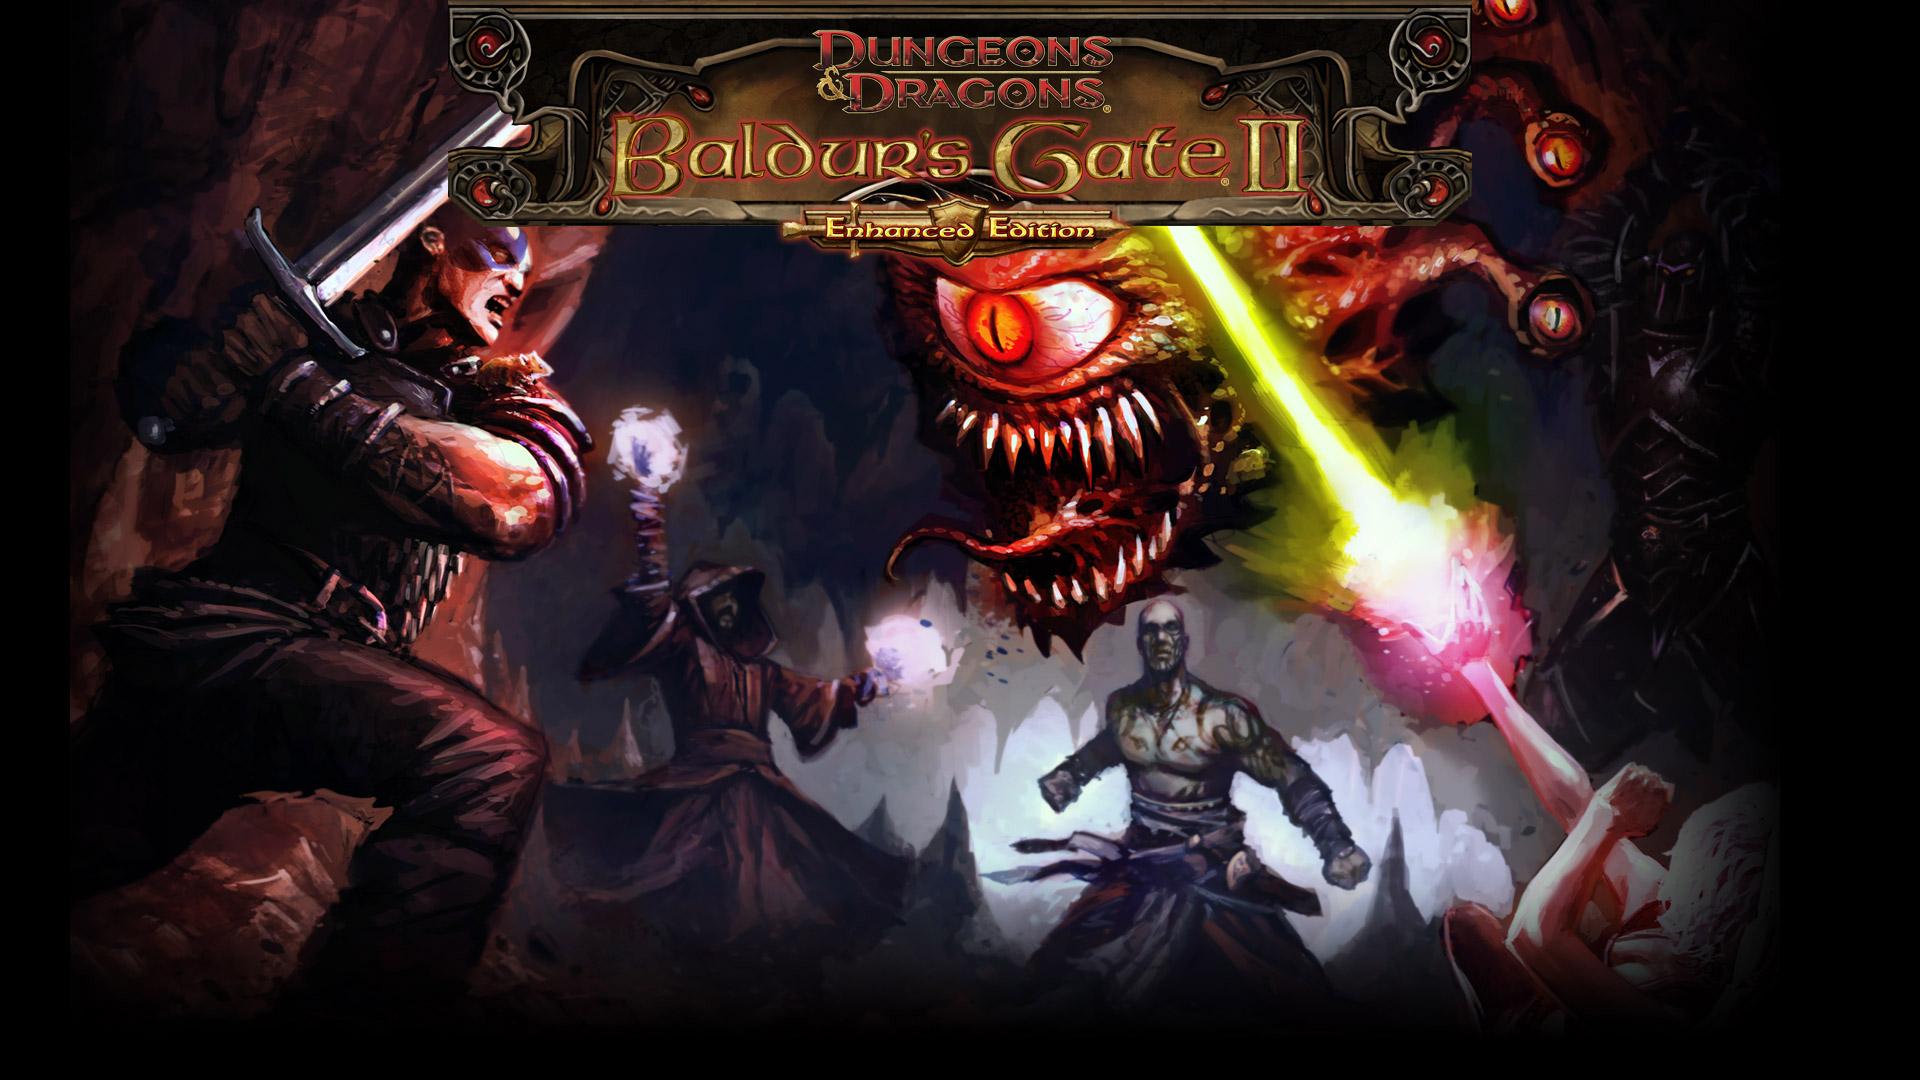 Baldur’s Gate II: Enhanced Edition – Now Available for Windows and Mac